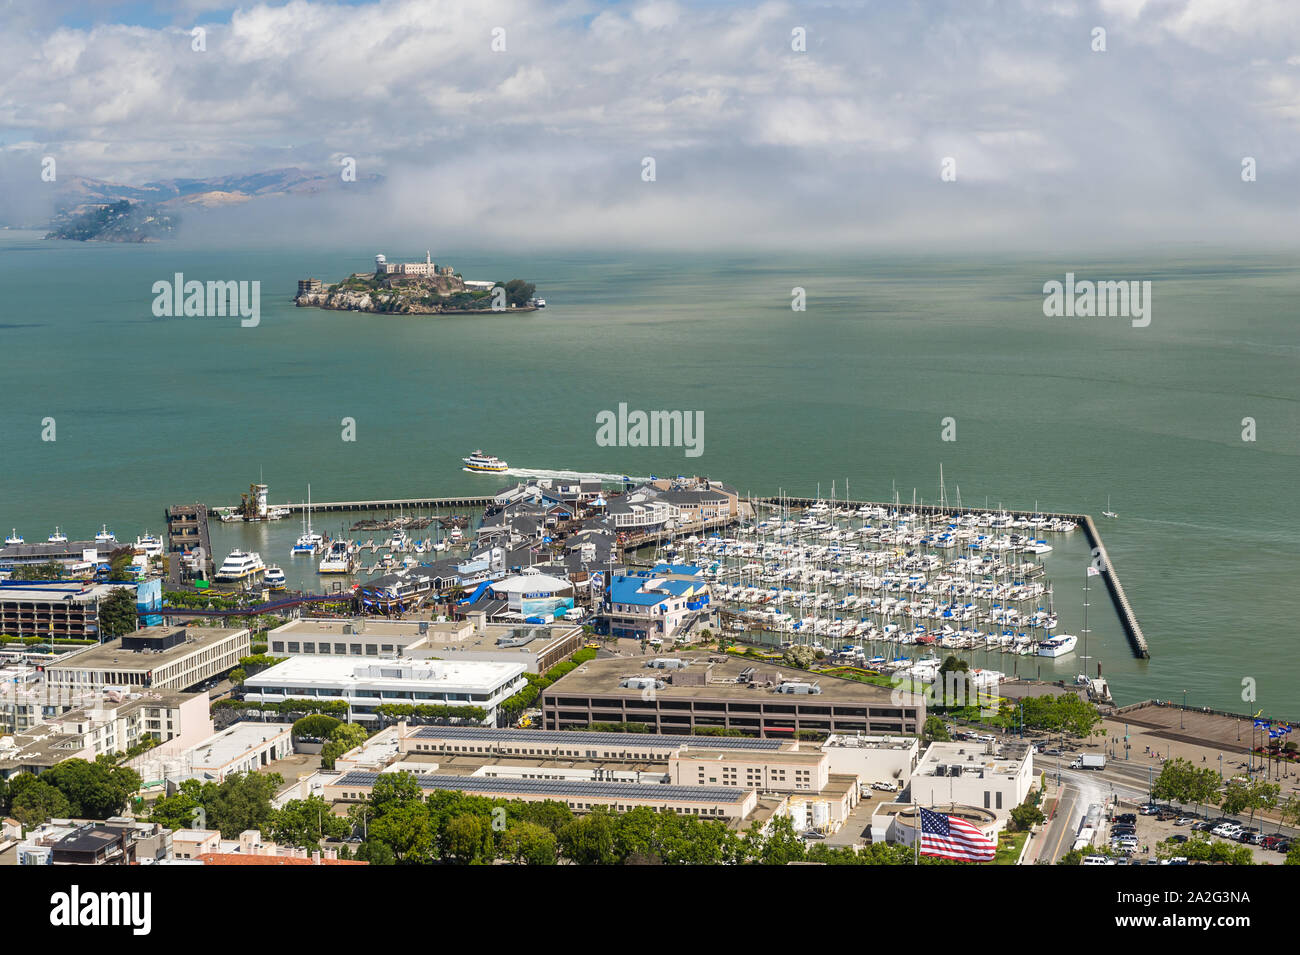 San Francisco, USA, 28 May 2013: Bay area with Alcatrax Island in view. Stock Photo